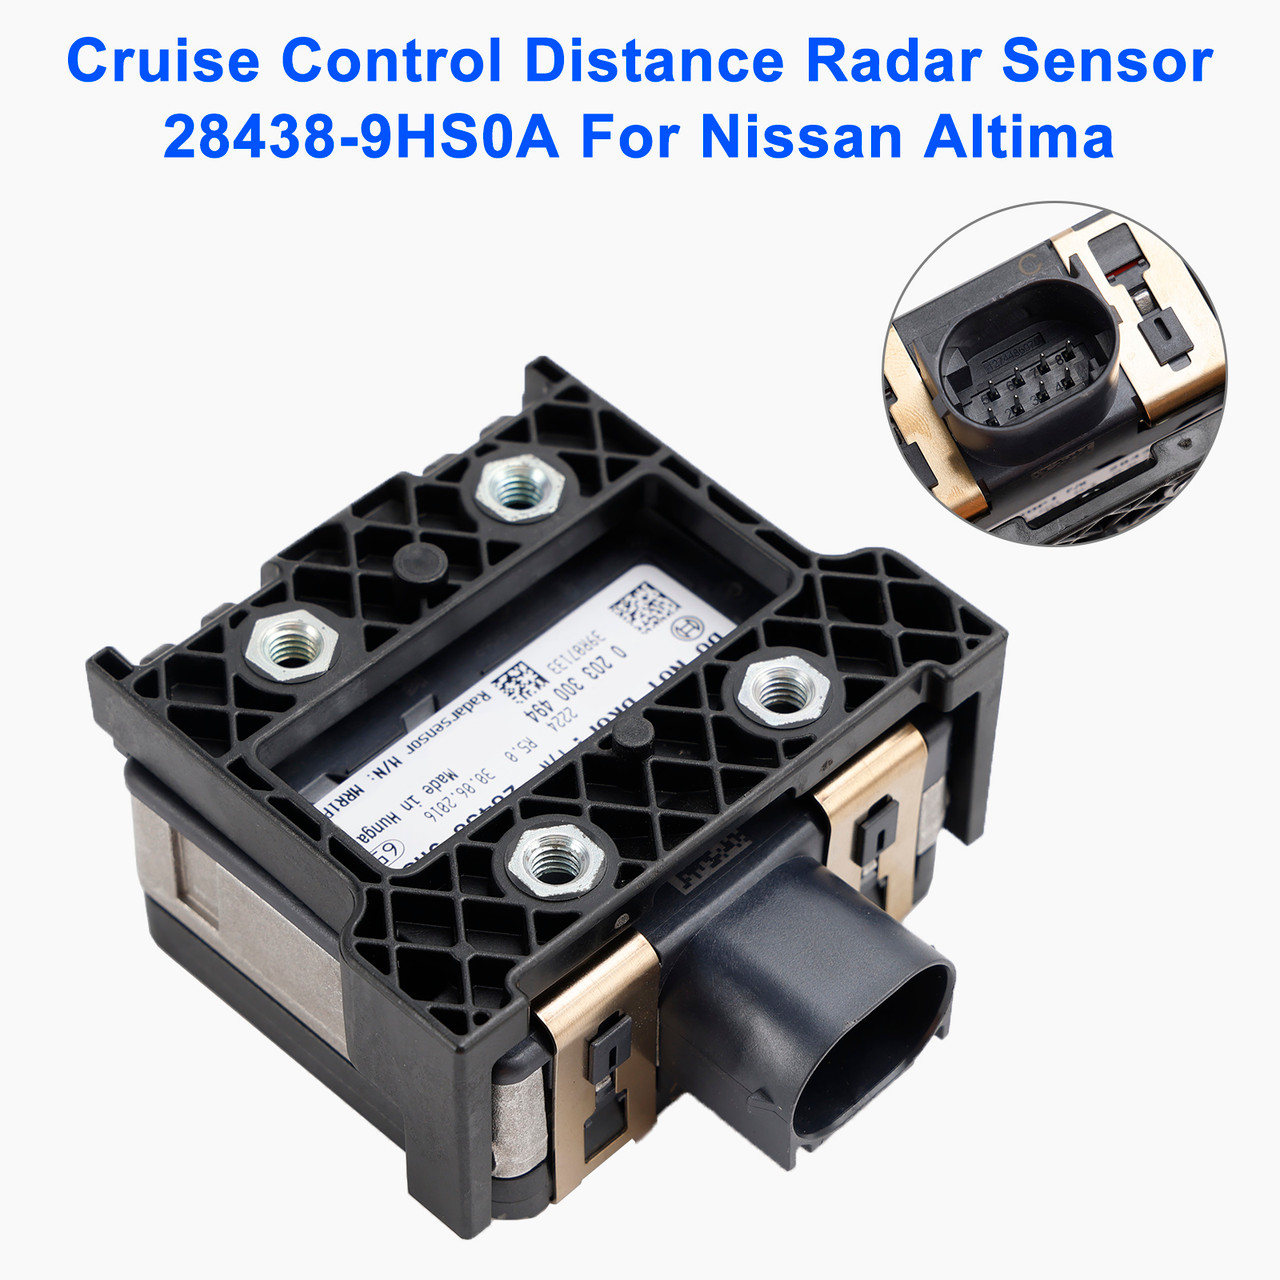 Cruise Control Distance Radar Sensor 28438-9HS0A For Nissan Altima 2016-2018